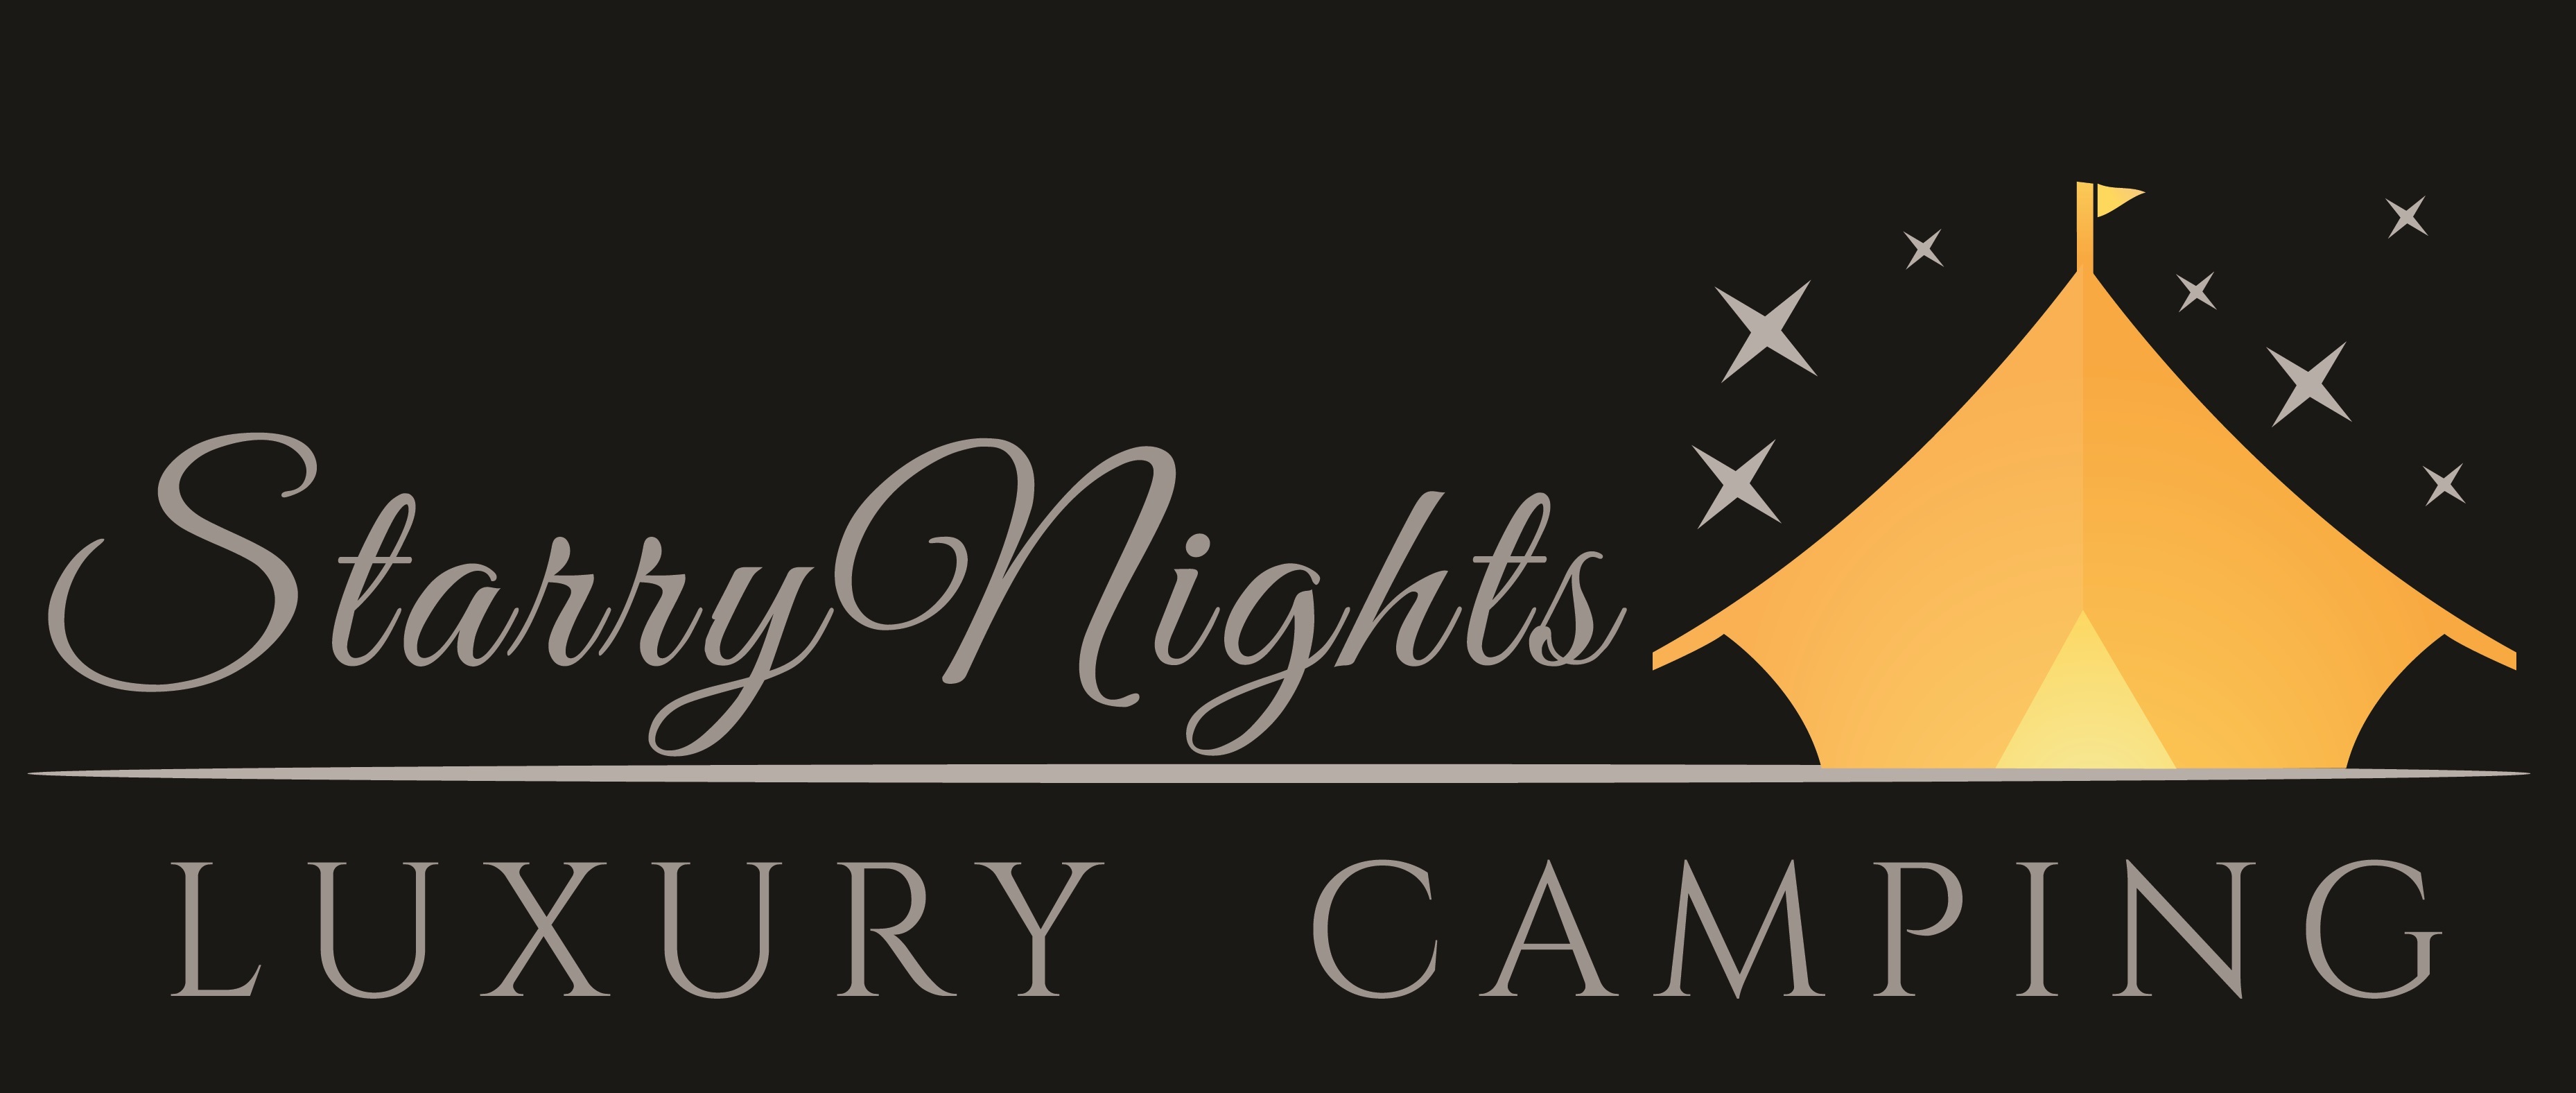 Starry Nights Luxury Camping